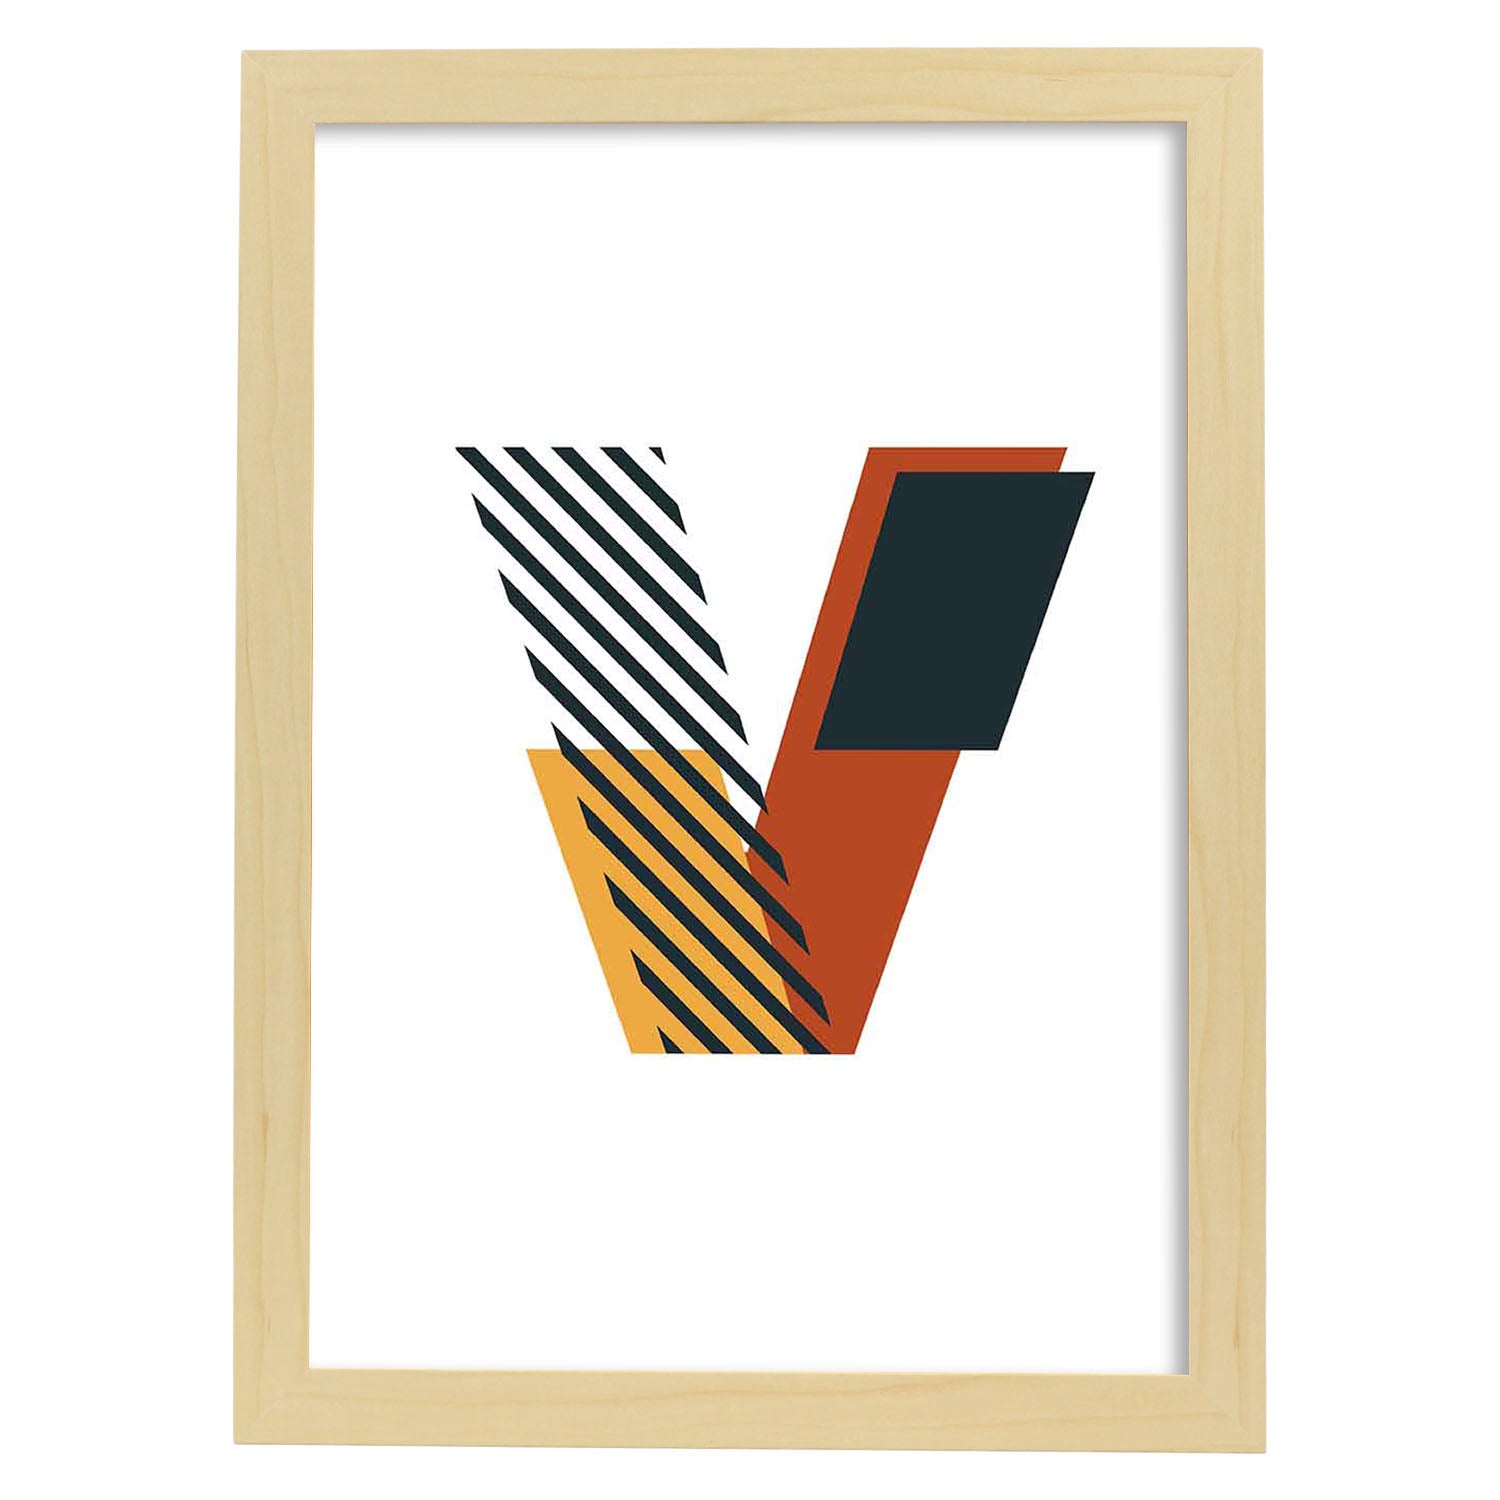 Poster de letra V. Lámina estilo Geometria con imágenes del alfabeto.-Artwork-Nacnic-A3-Marco Madera clara-Nacnic Estudio SL